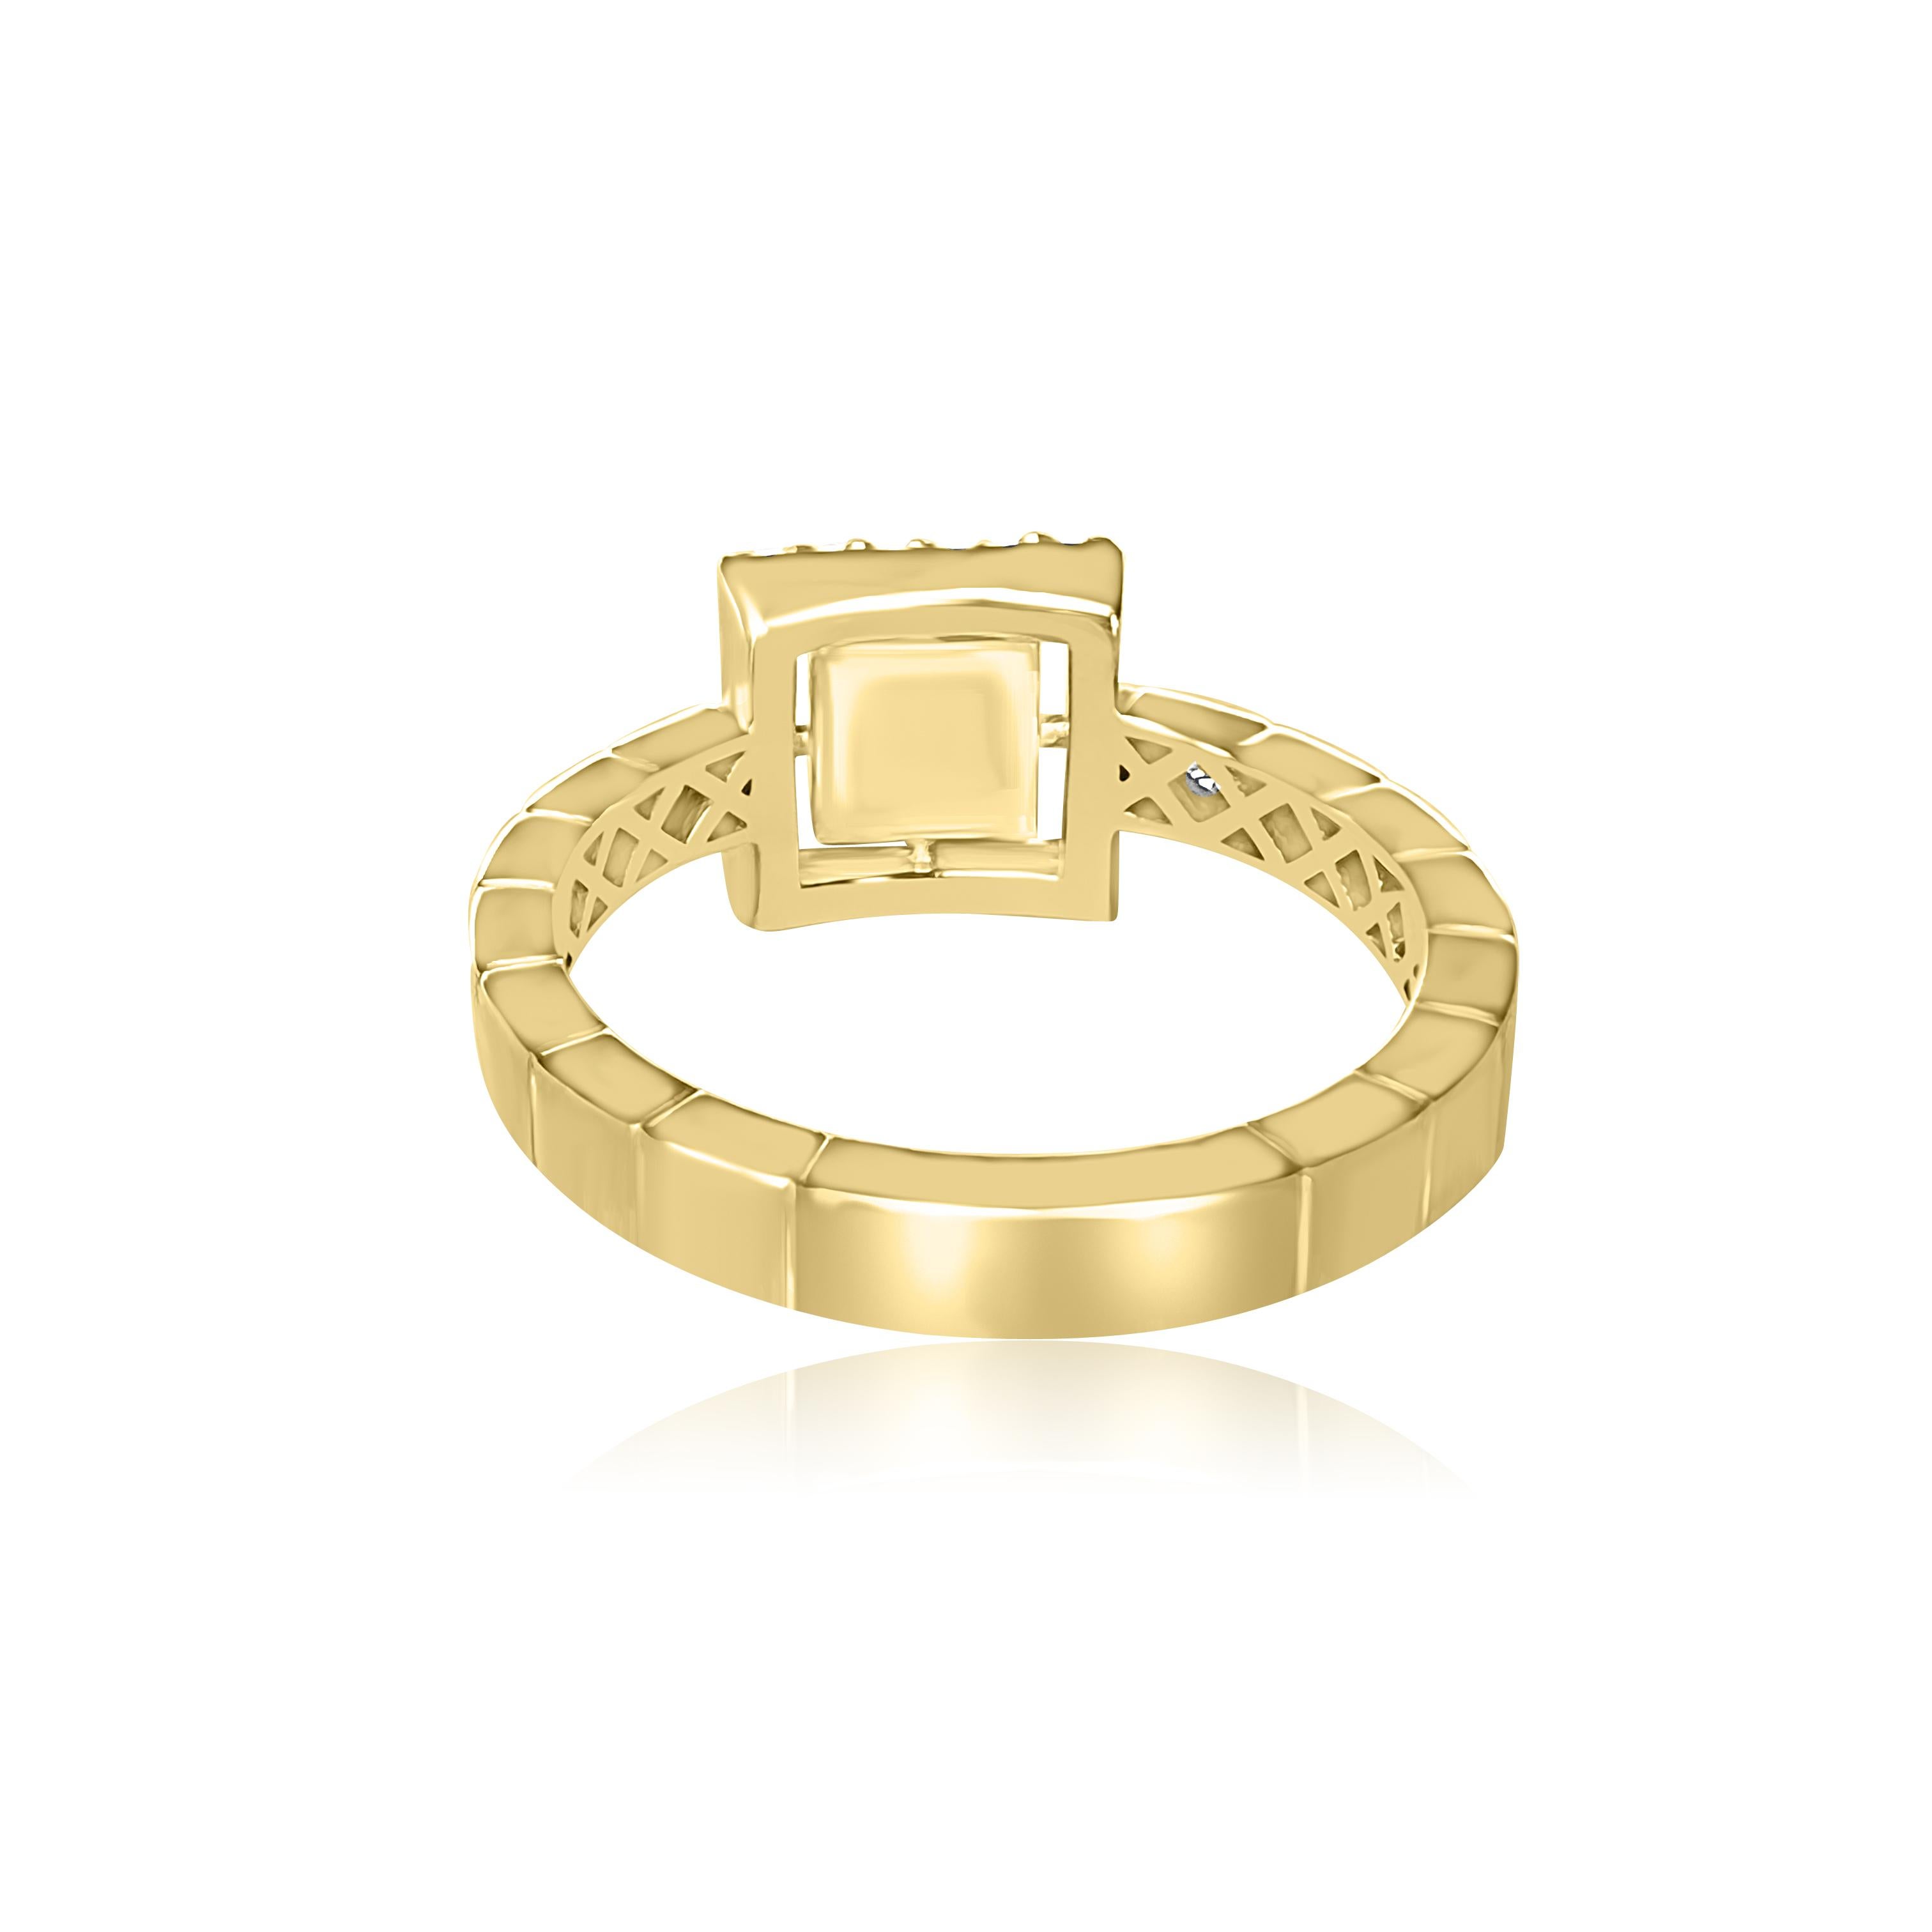 Art Deco Architectural Shape Square Enamel Fashion Diamond Ring sz 7 For Sale